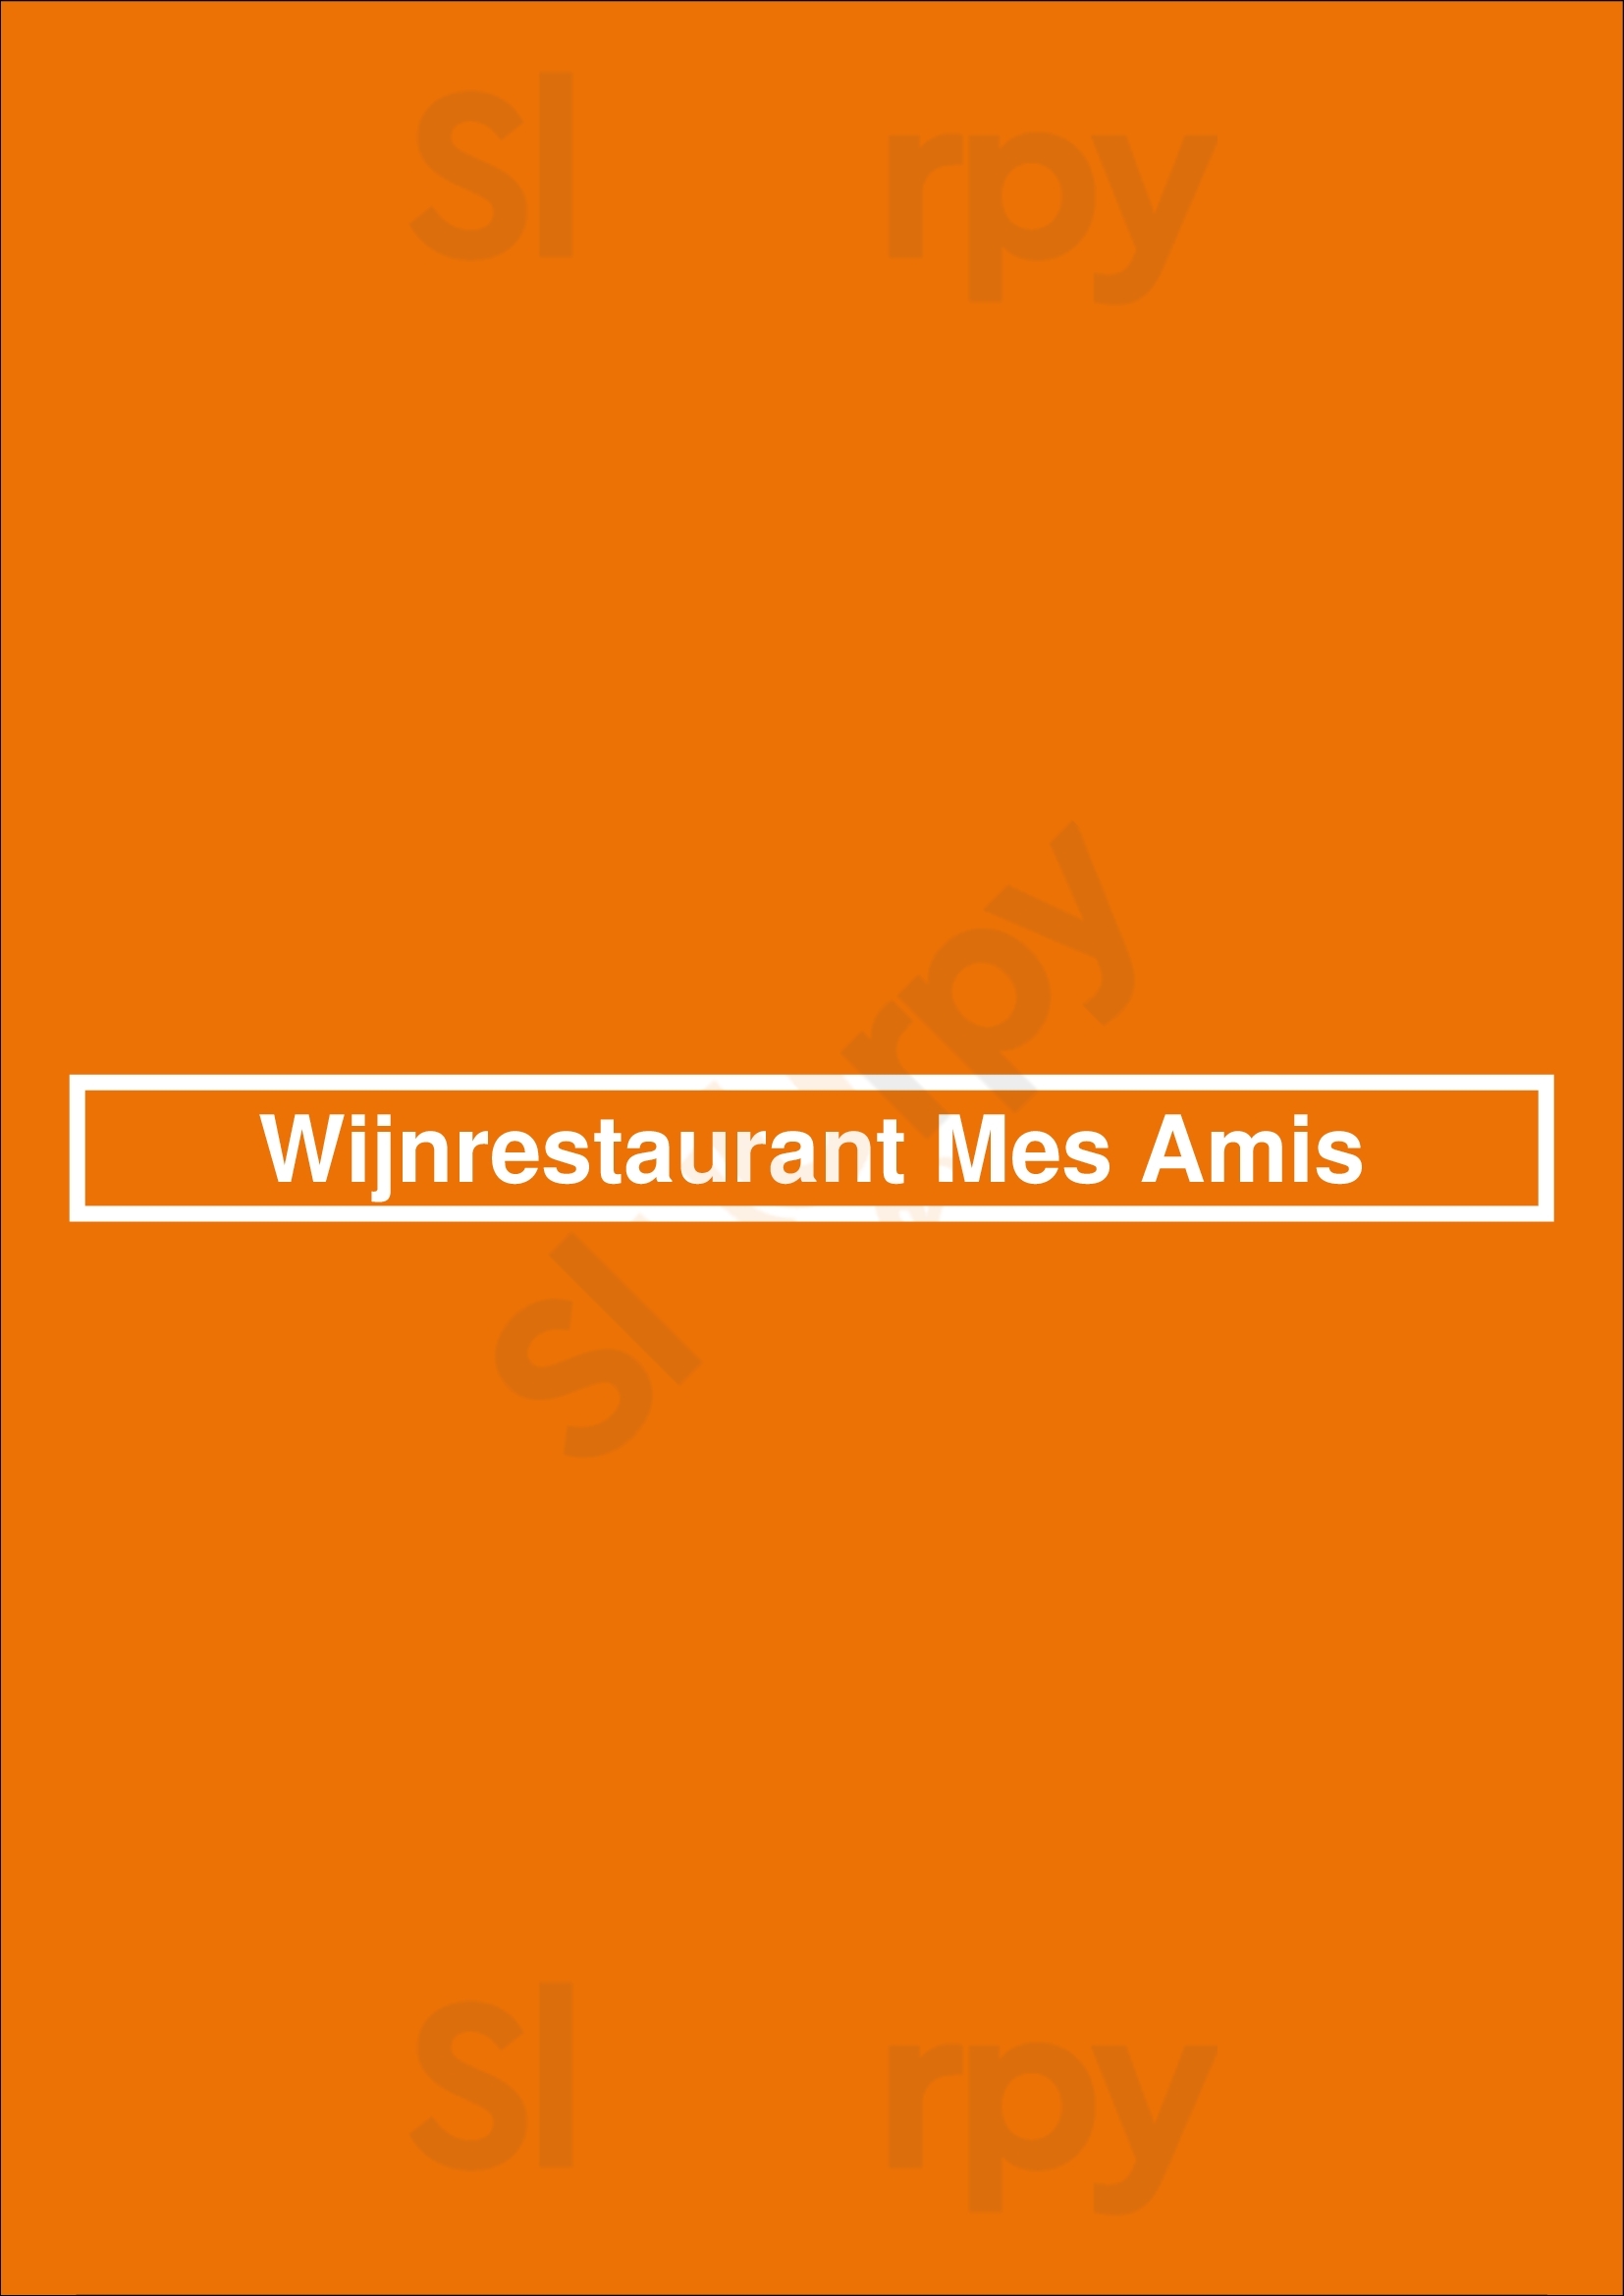 Wijnrestaurant Mes Amis Maastricht Menu - 1